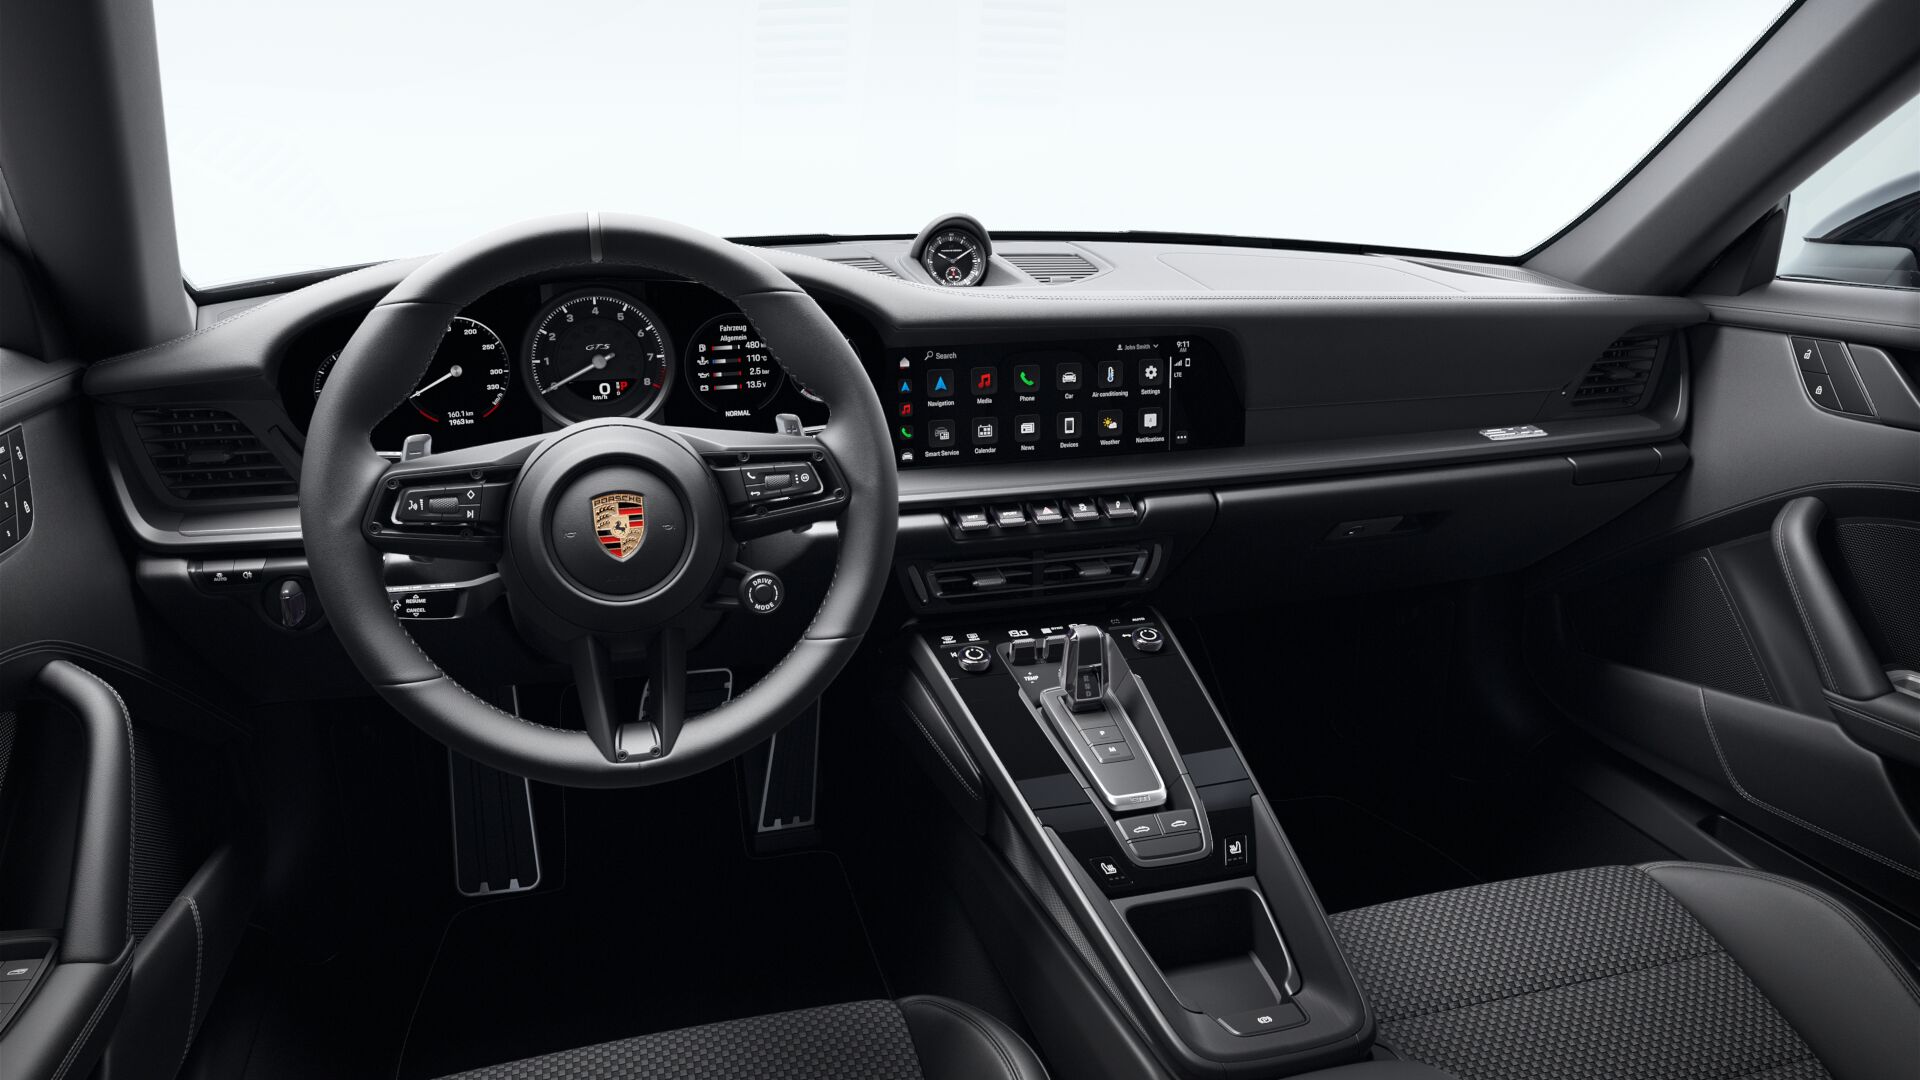 Exterior view of 911 Edition 50 Years Porsche Design